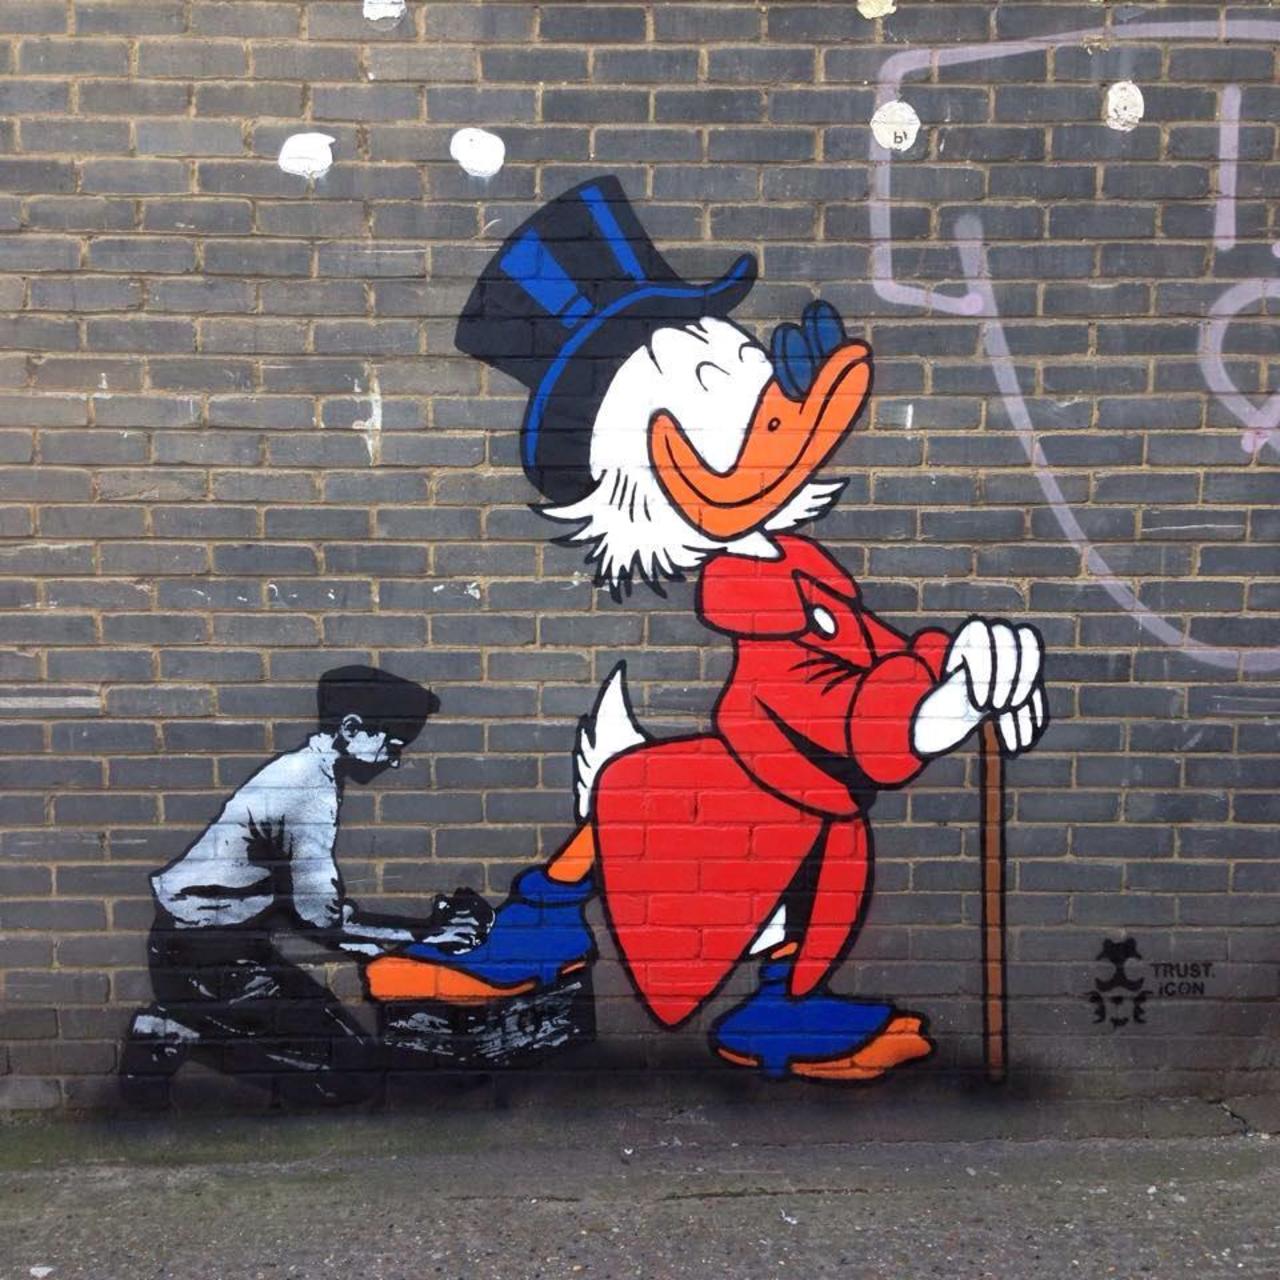 'Shine Box' 
New Street Art by iCON in Bethnal Green, London 

#art #arte #graffiti #streetart http://t.co/Jmk8Pk6GfE